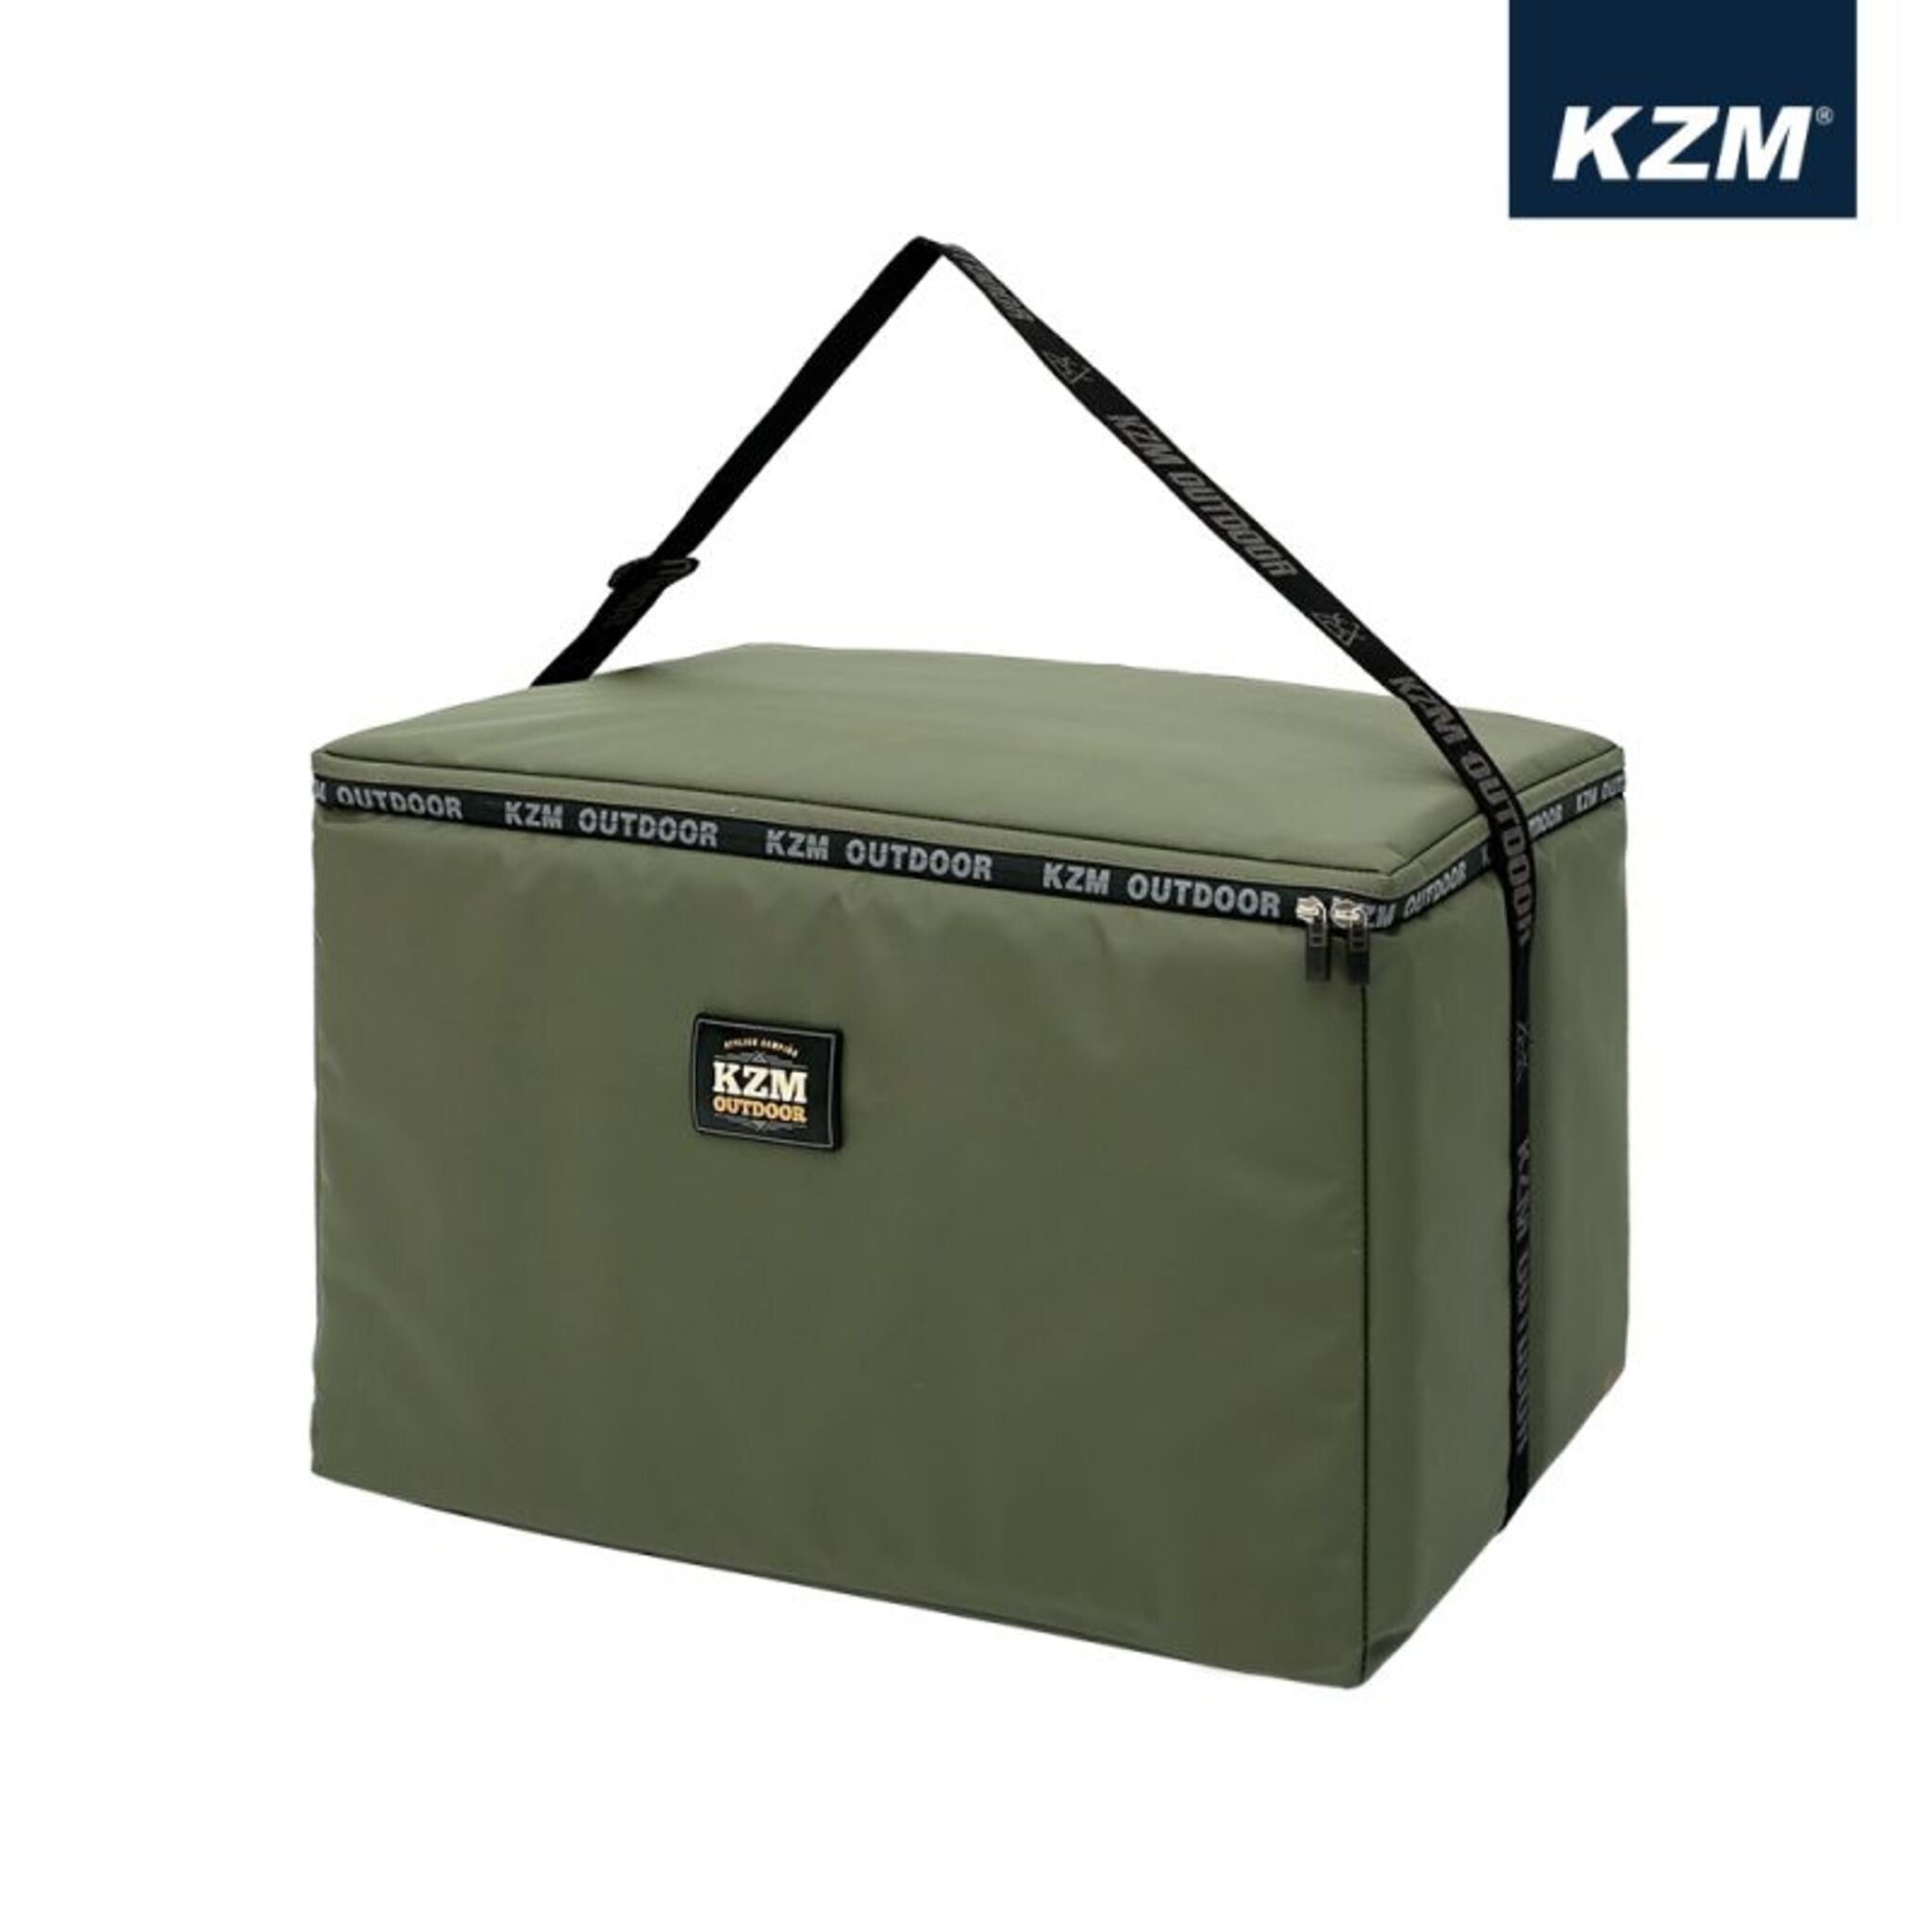 KAZMI KZM 素面個性保冷袋 45L 軍綠色 K20T3K008